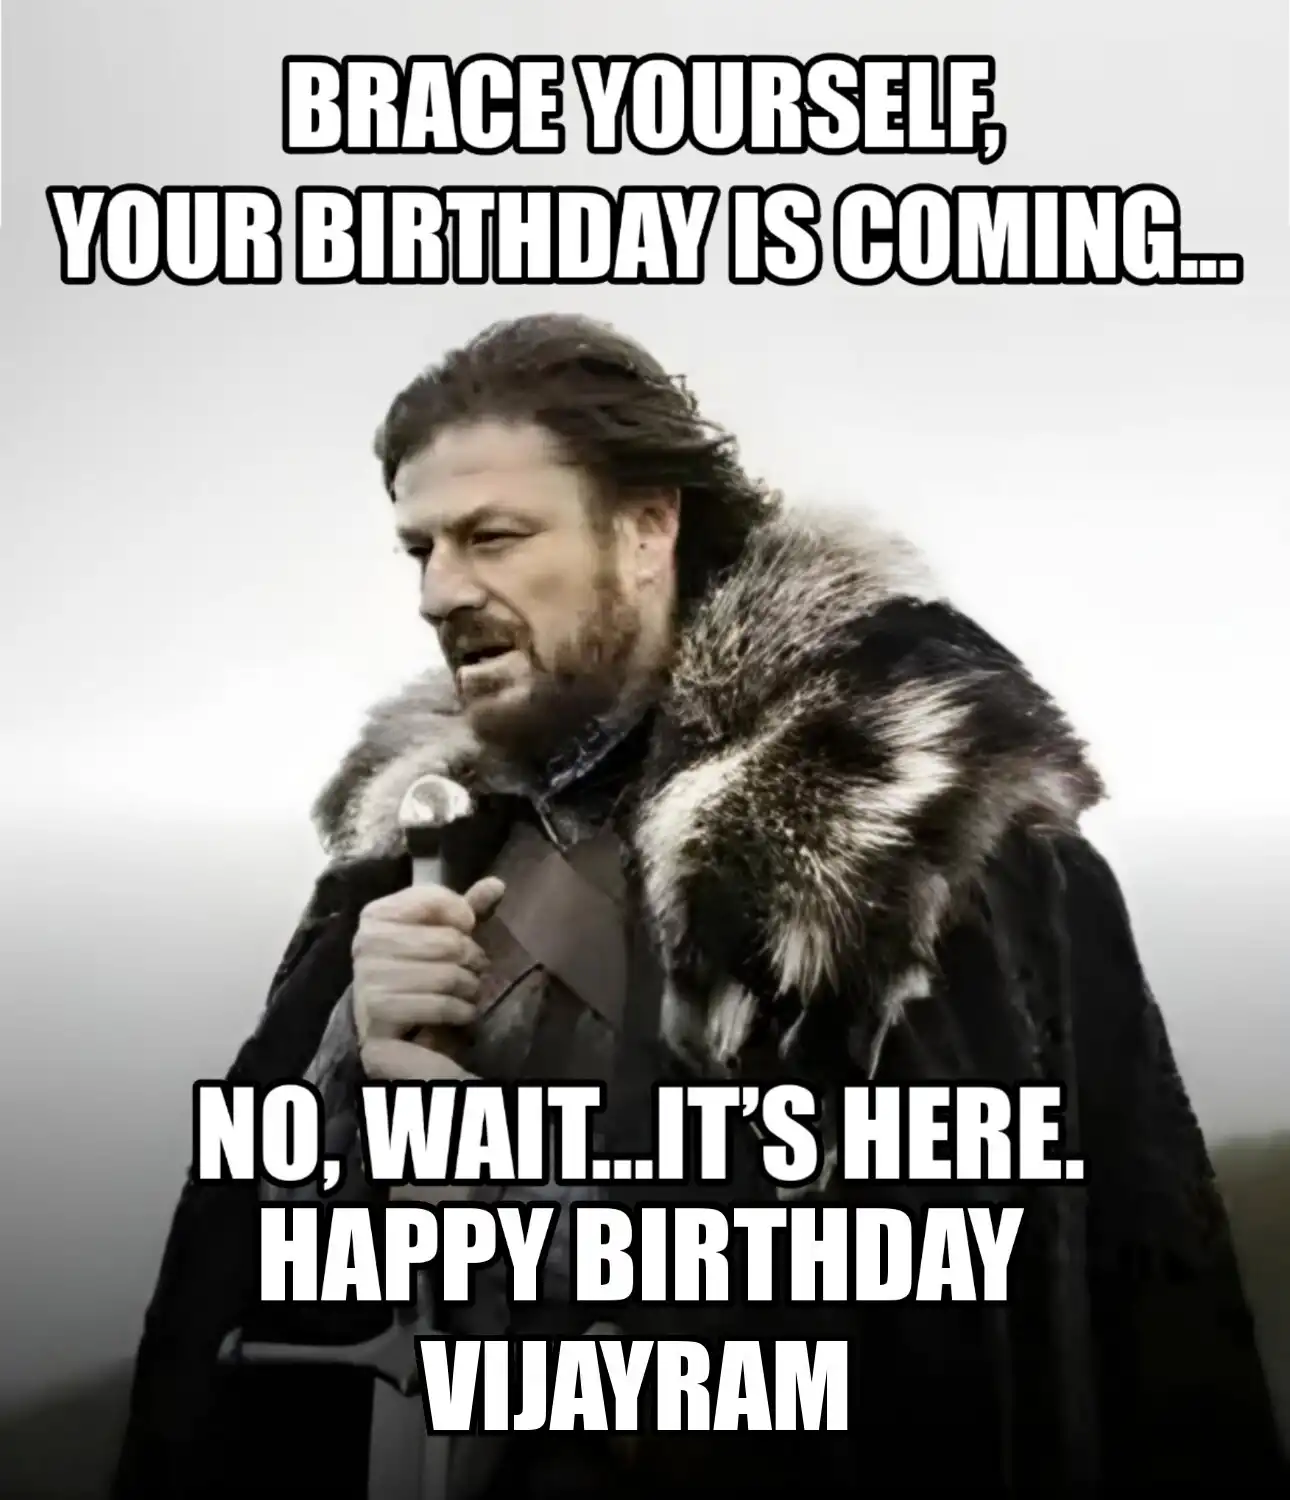 Happy Birthday Vijayram Brace Yourself Your Birthday Is Coming Meme